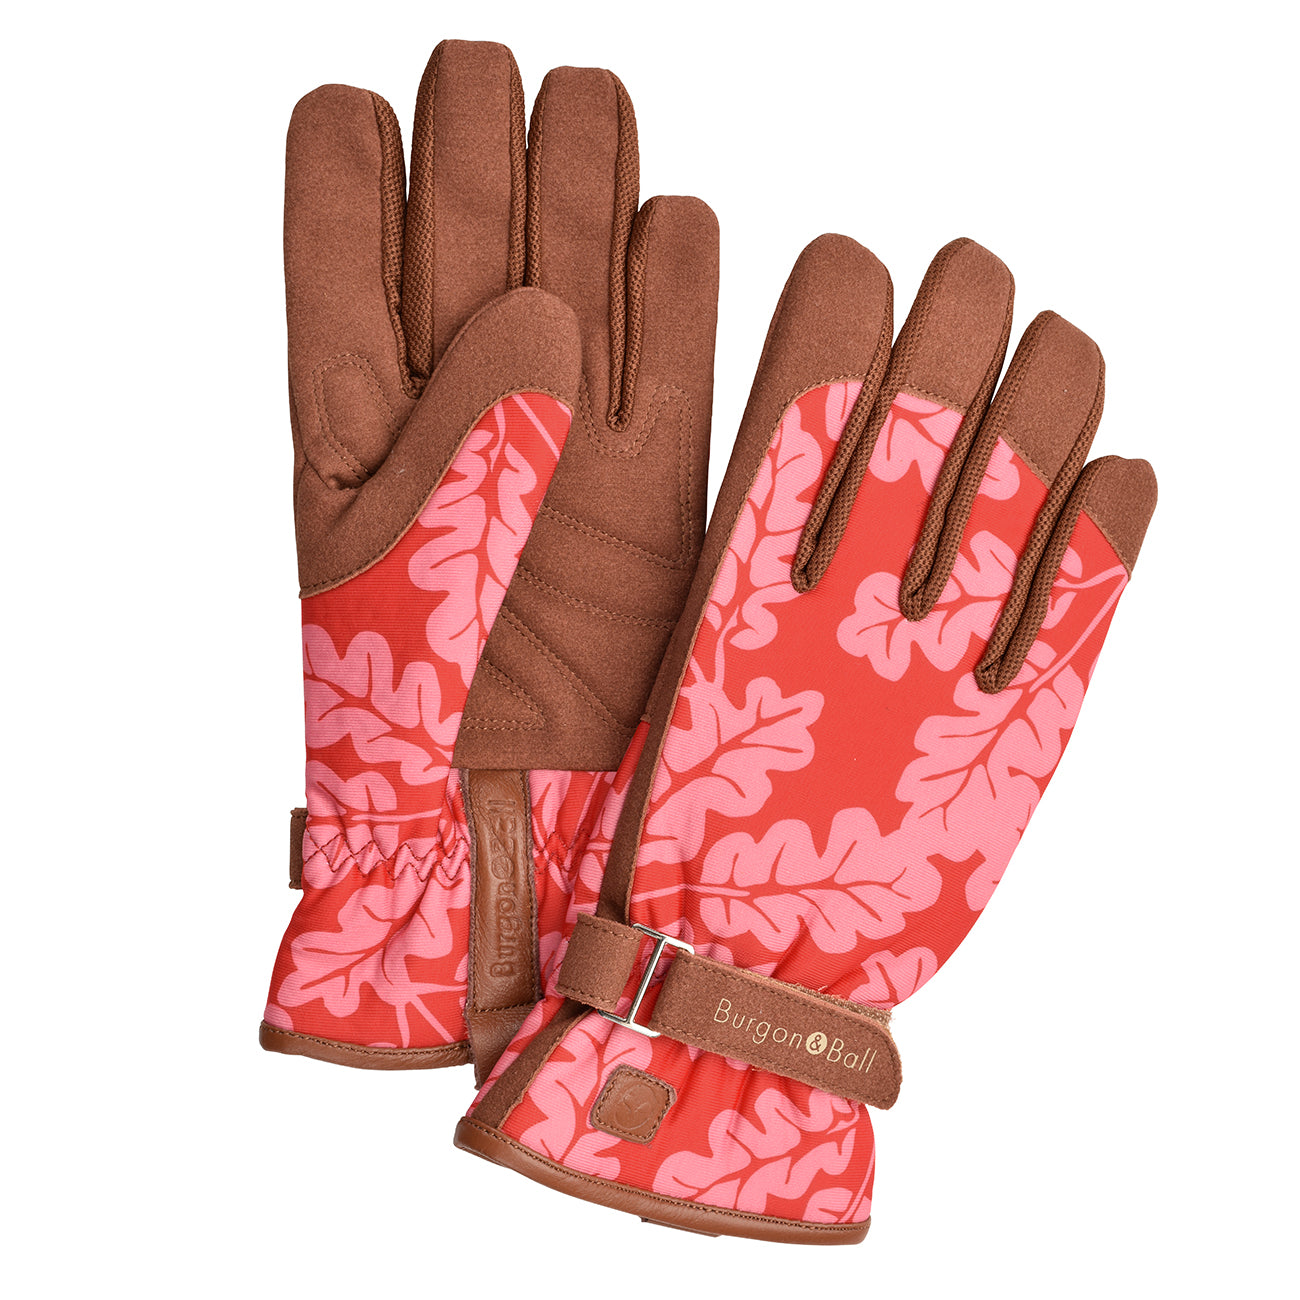 Burgon & Ball Women's Gardening Gloves